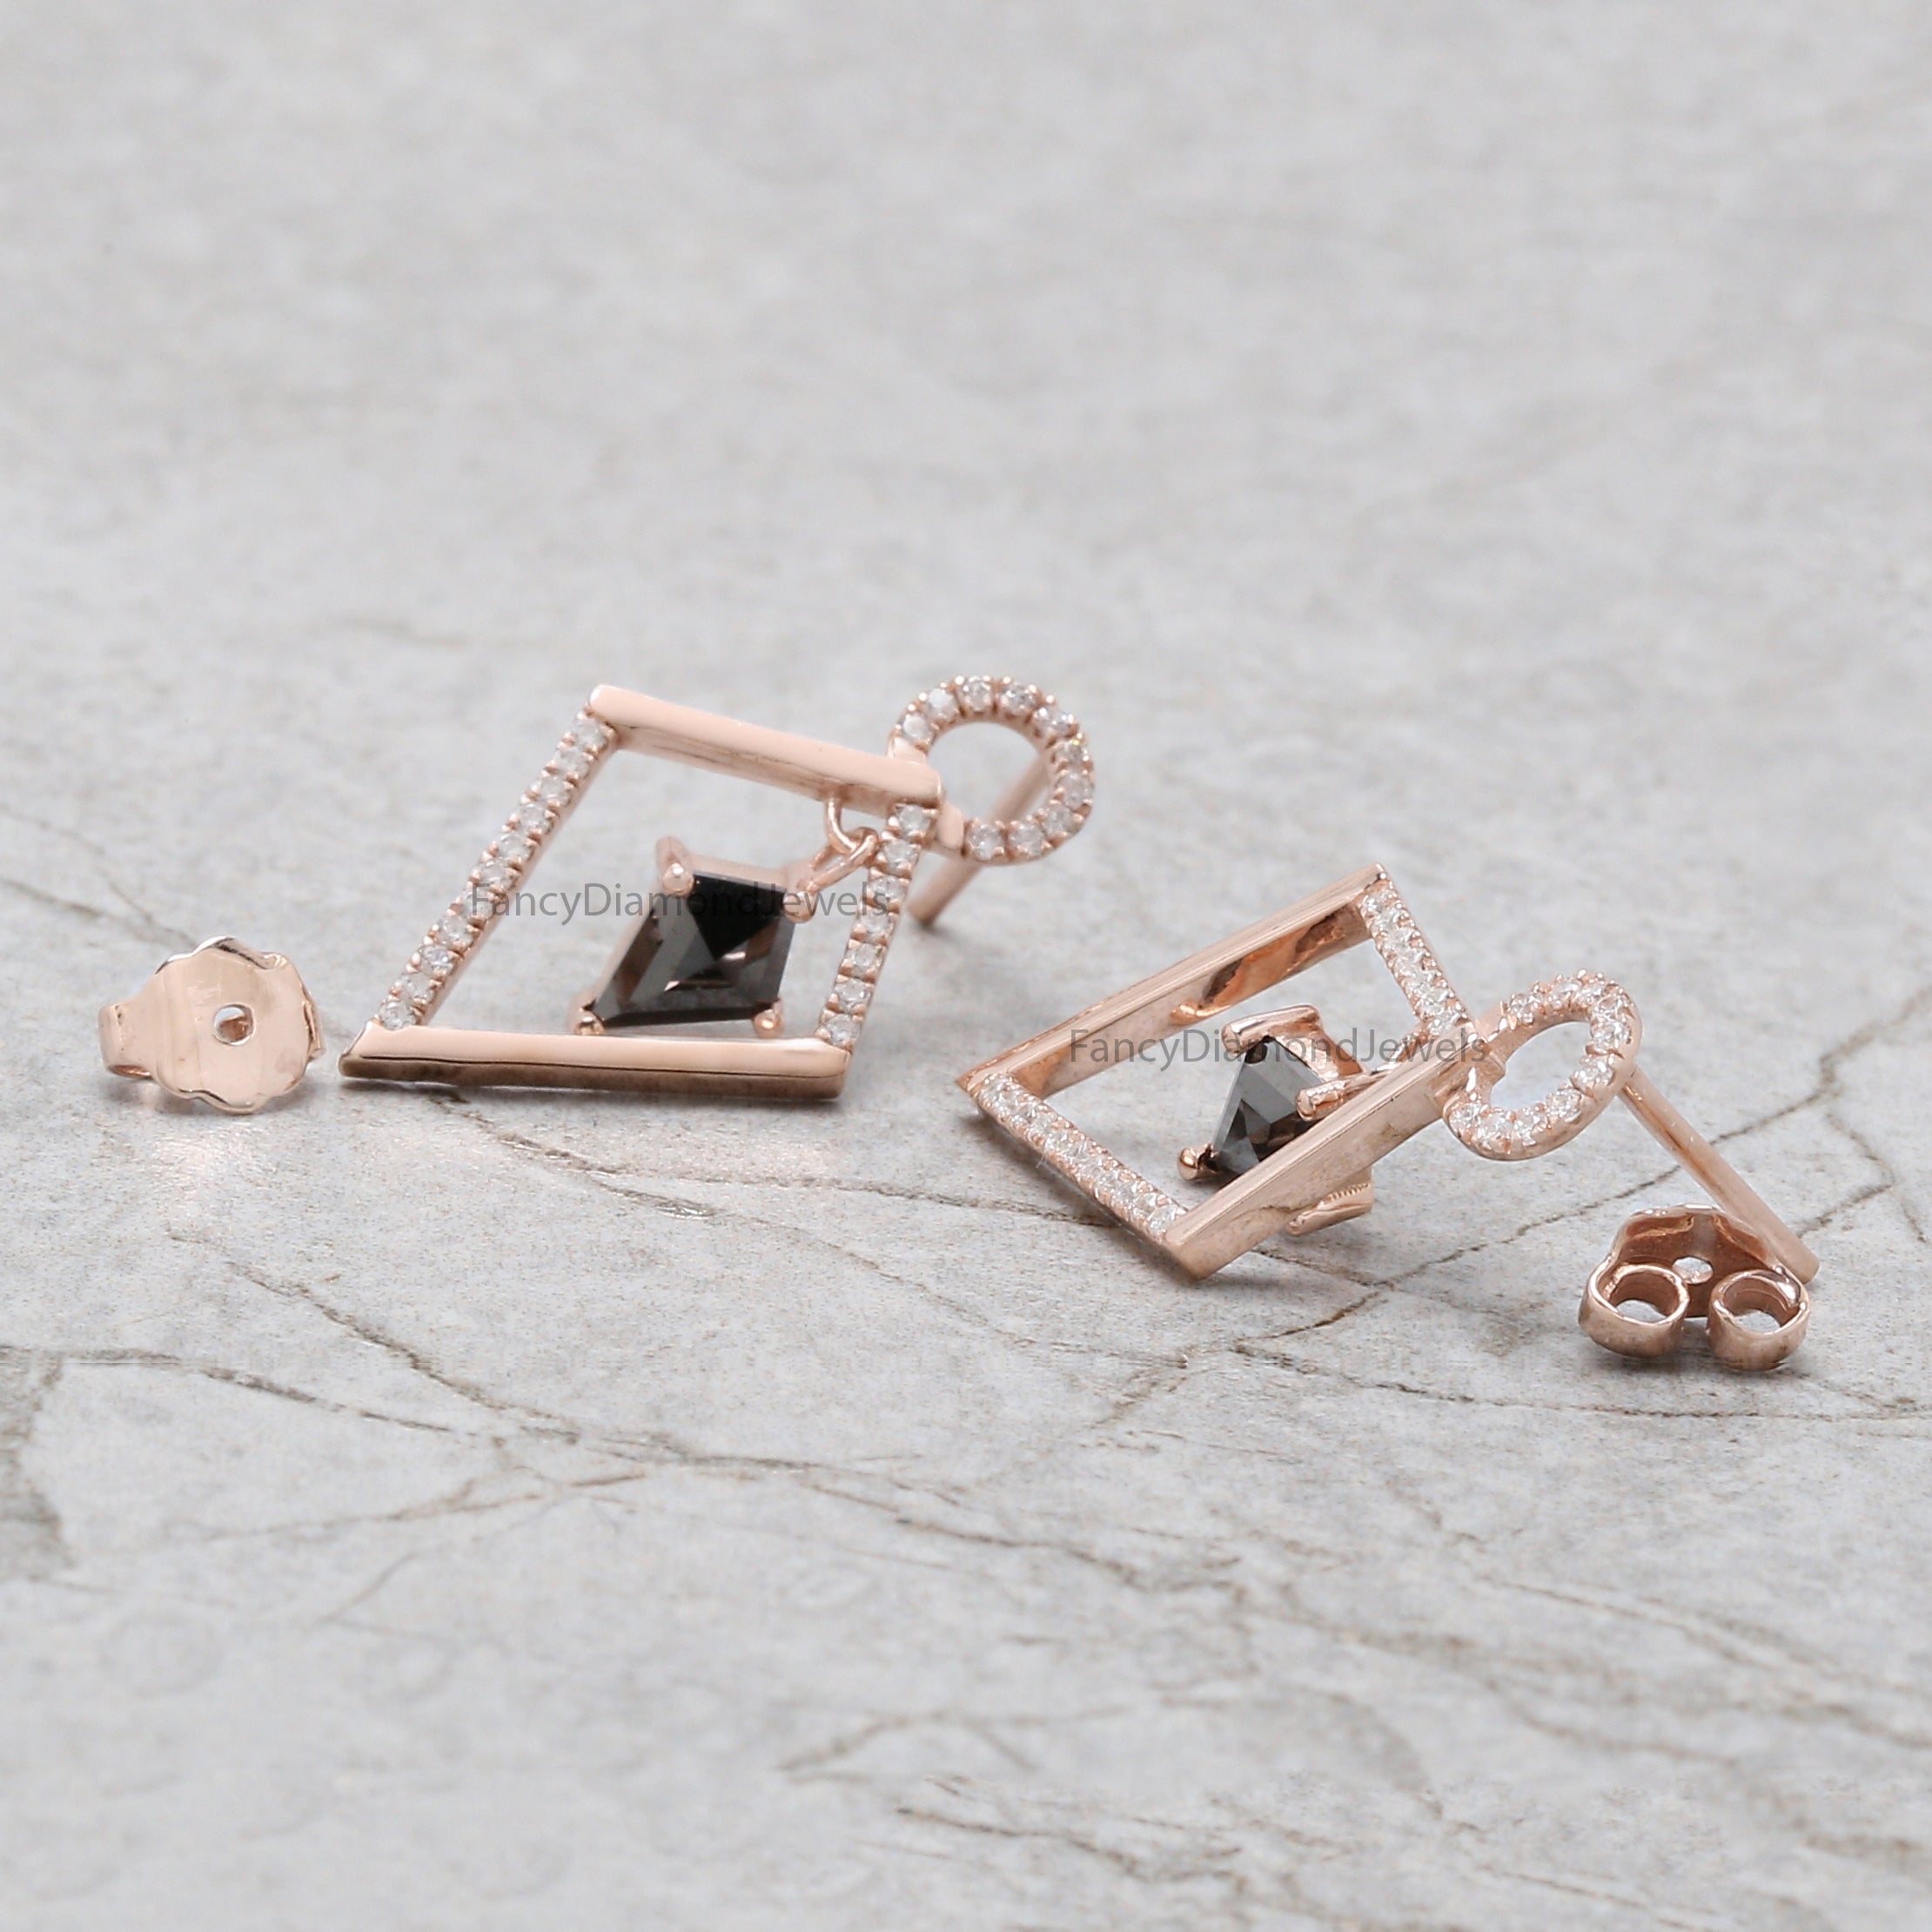 Kite Black Color Diamond Earring, Kite Black Shape Earring, Prong Earring, Engagement Earring, Earlobe Earrings, Earrings Jewelry, KDN2273